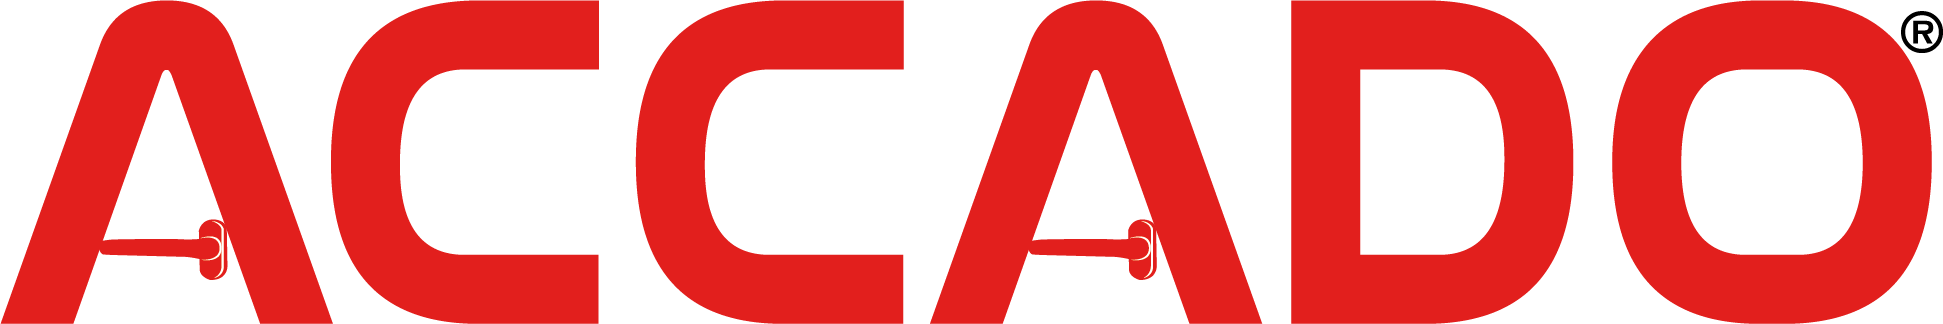 логотип ACCADO